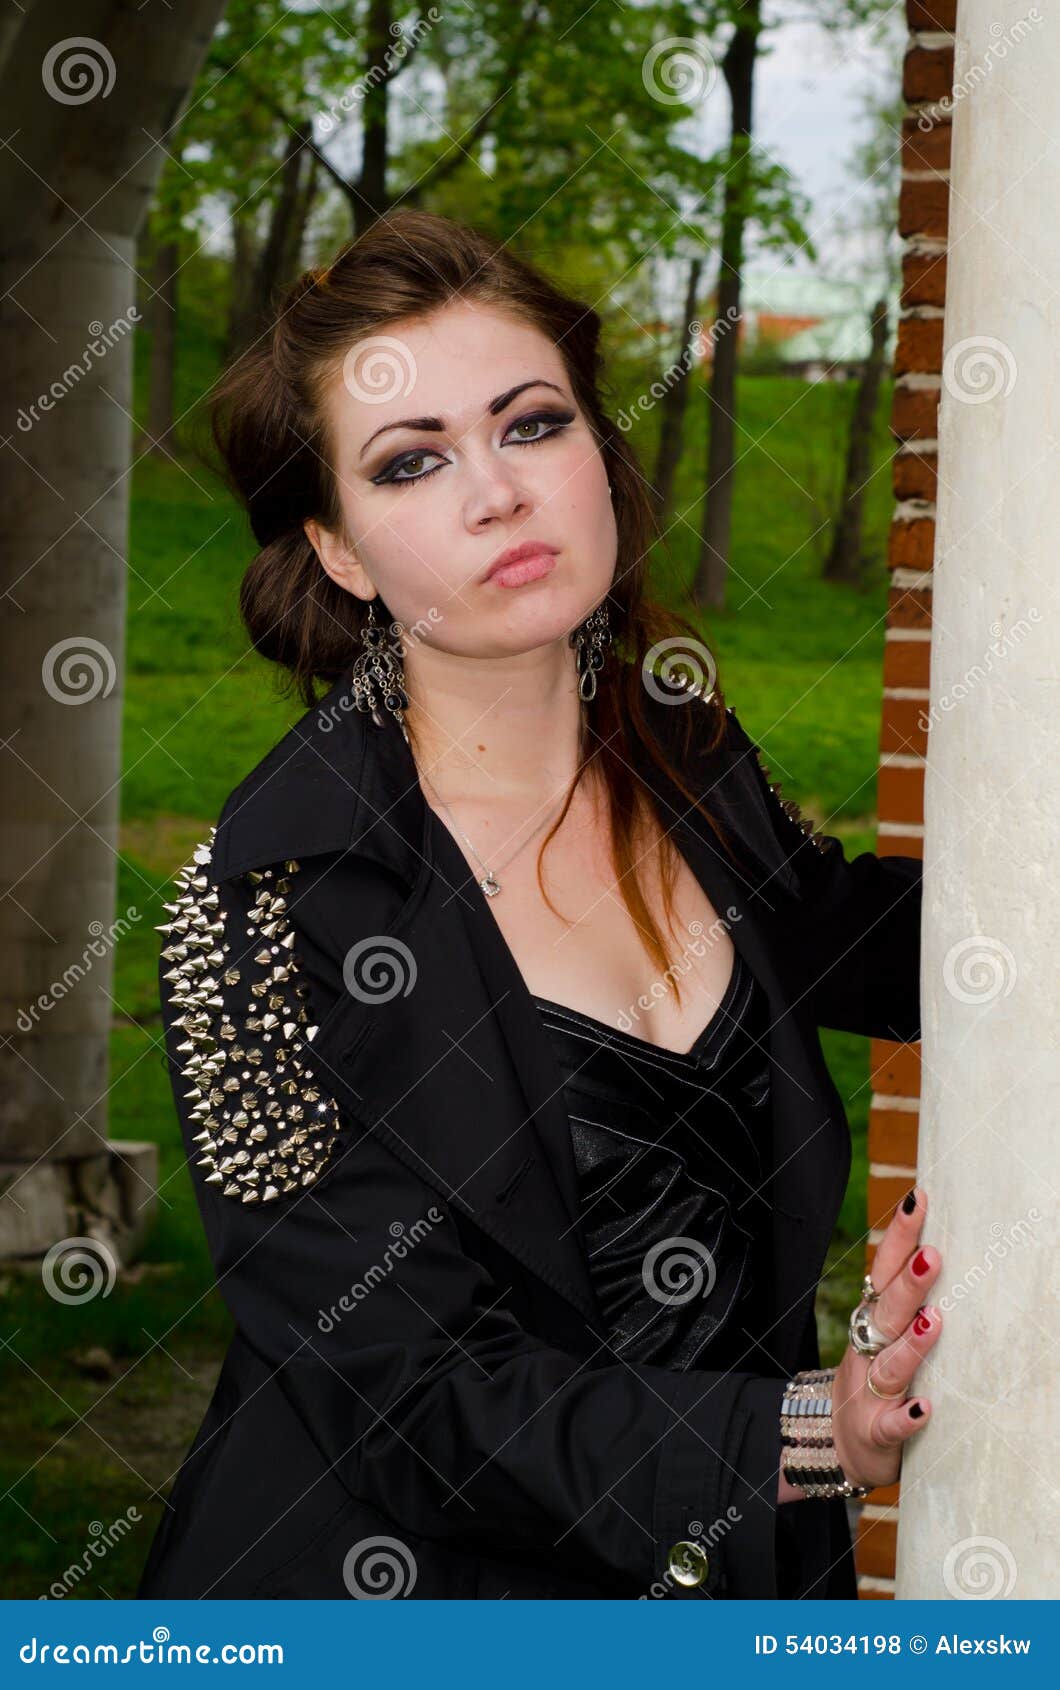 The girl at a brick wall stock photo. Image of eyes, holding - 54034198